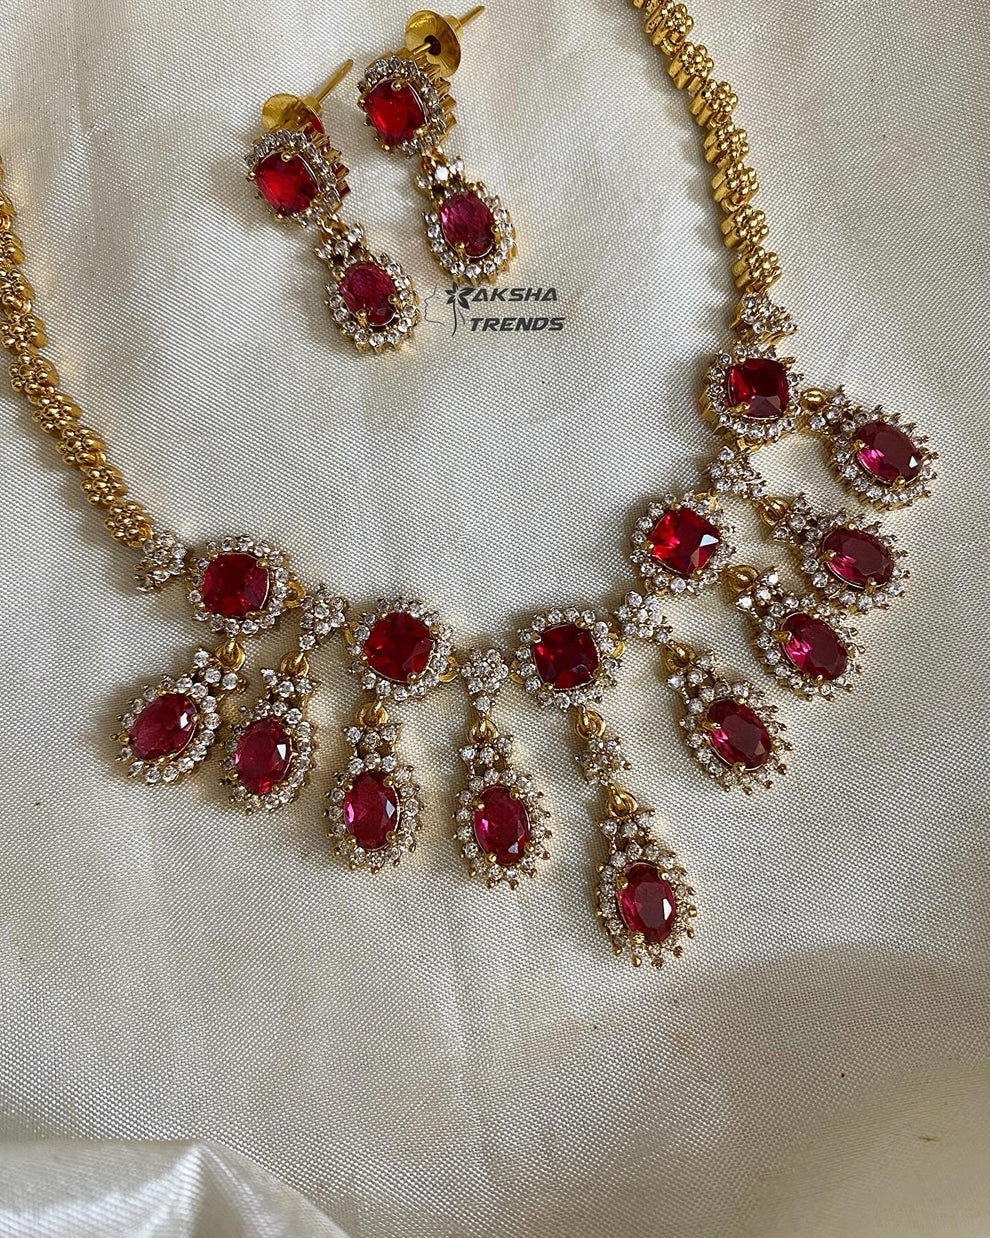 Royal Diamond Necklace -Ruby Aksha Trends 